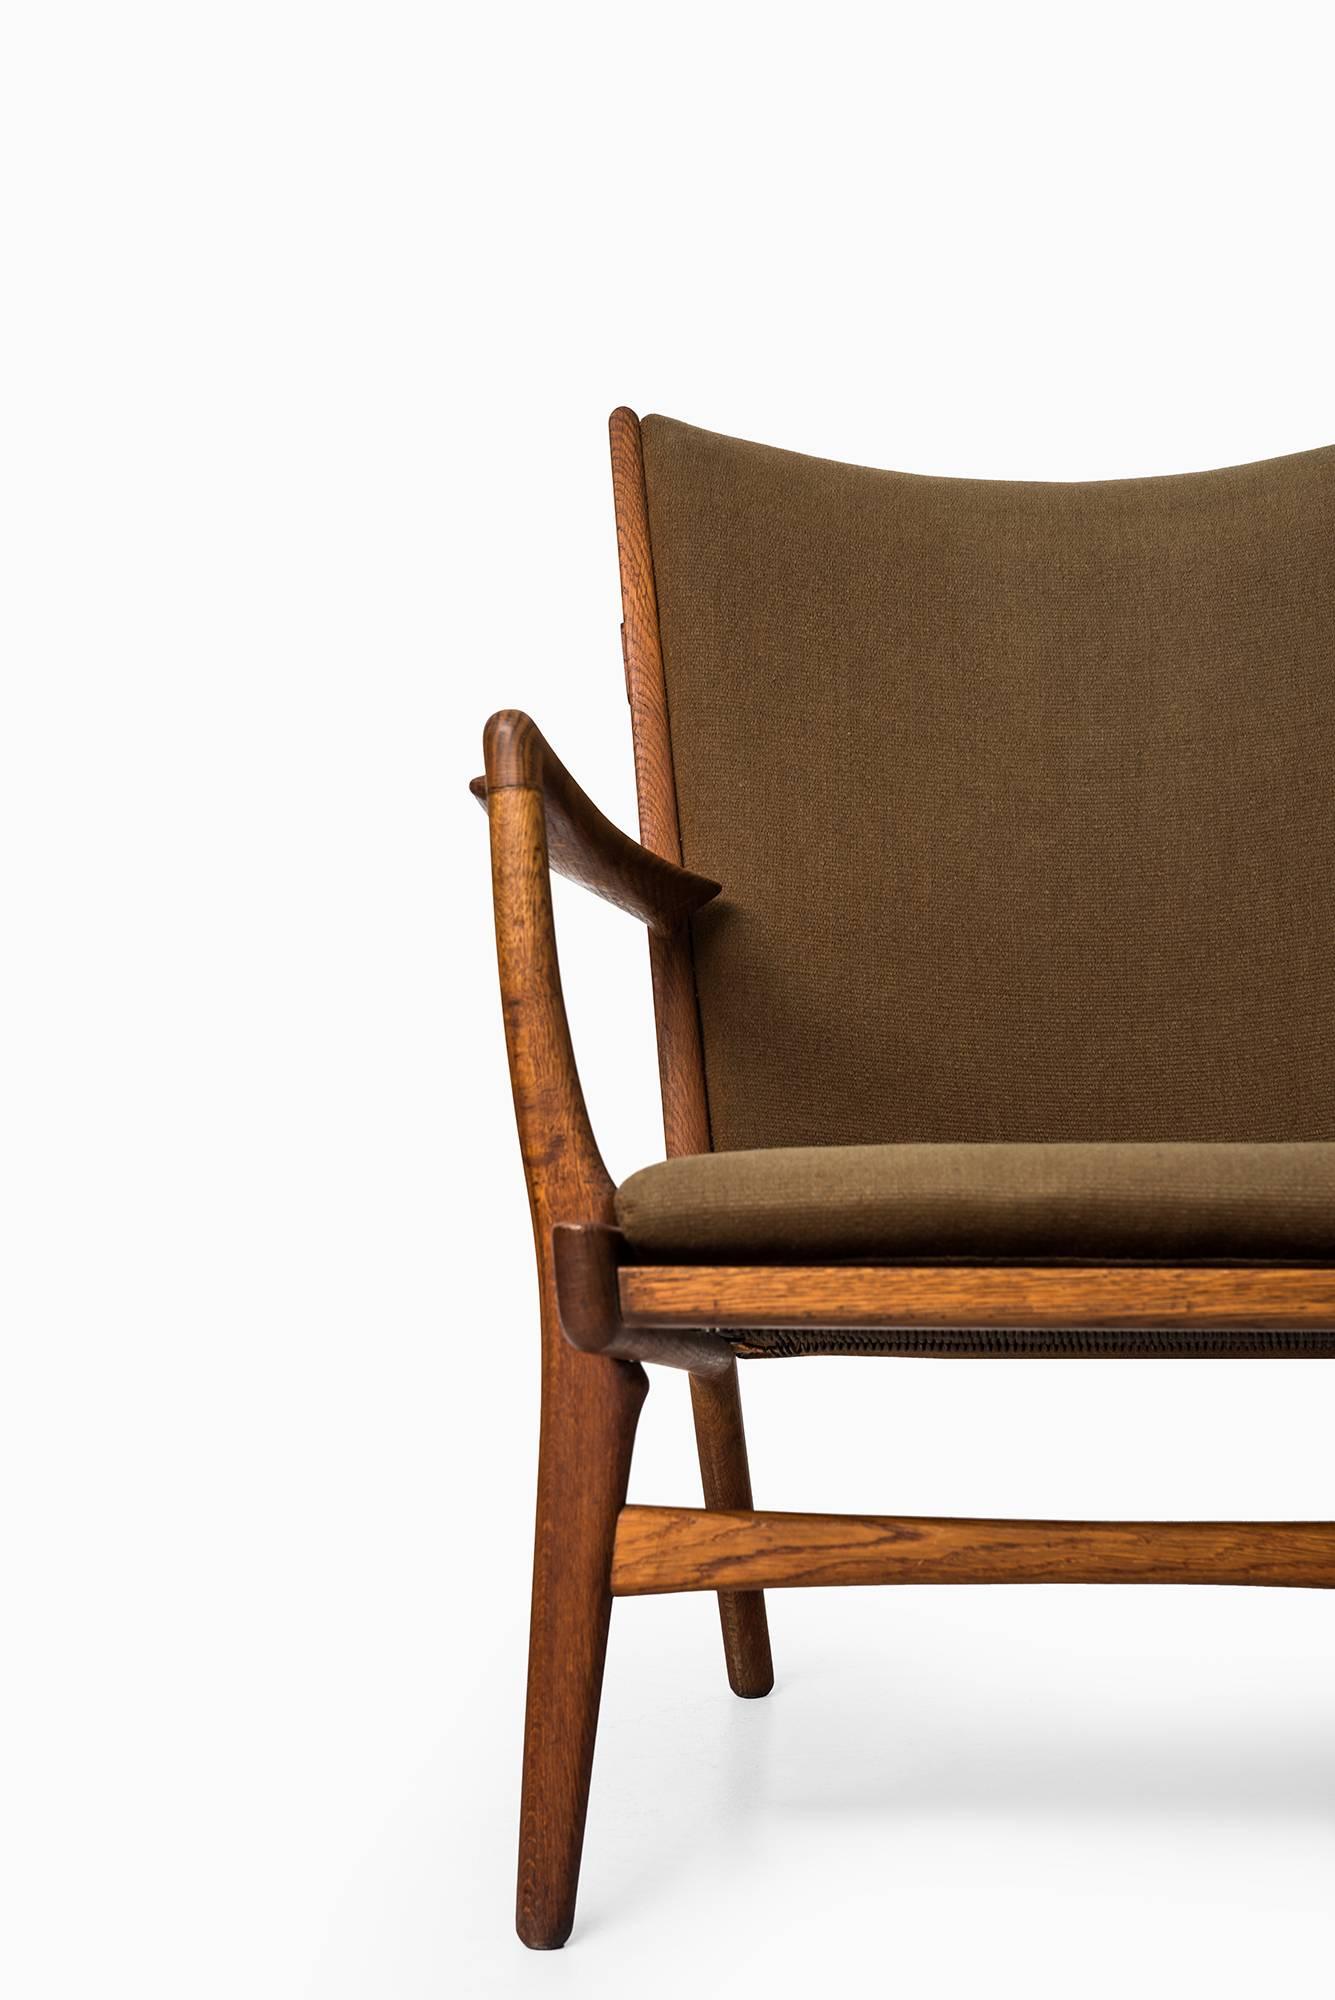 Rare easy chair model AP-16 designed by Hans Wegner. Produced by AP-Stolen in Denmark.